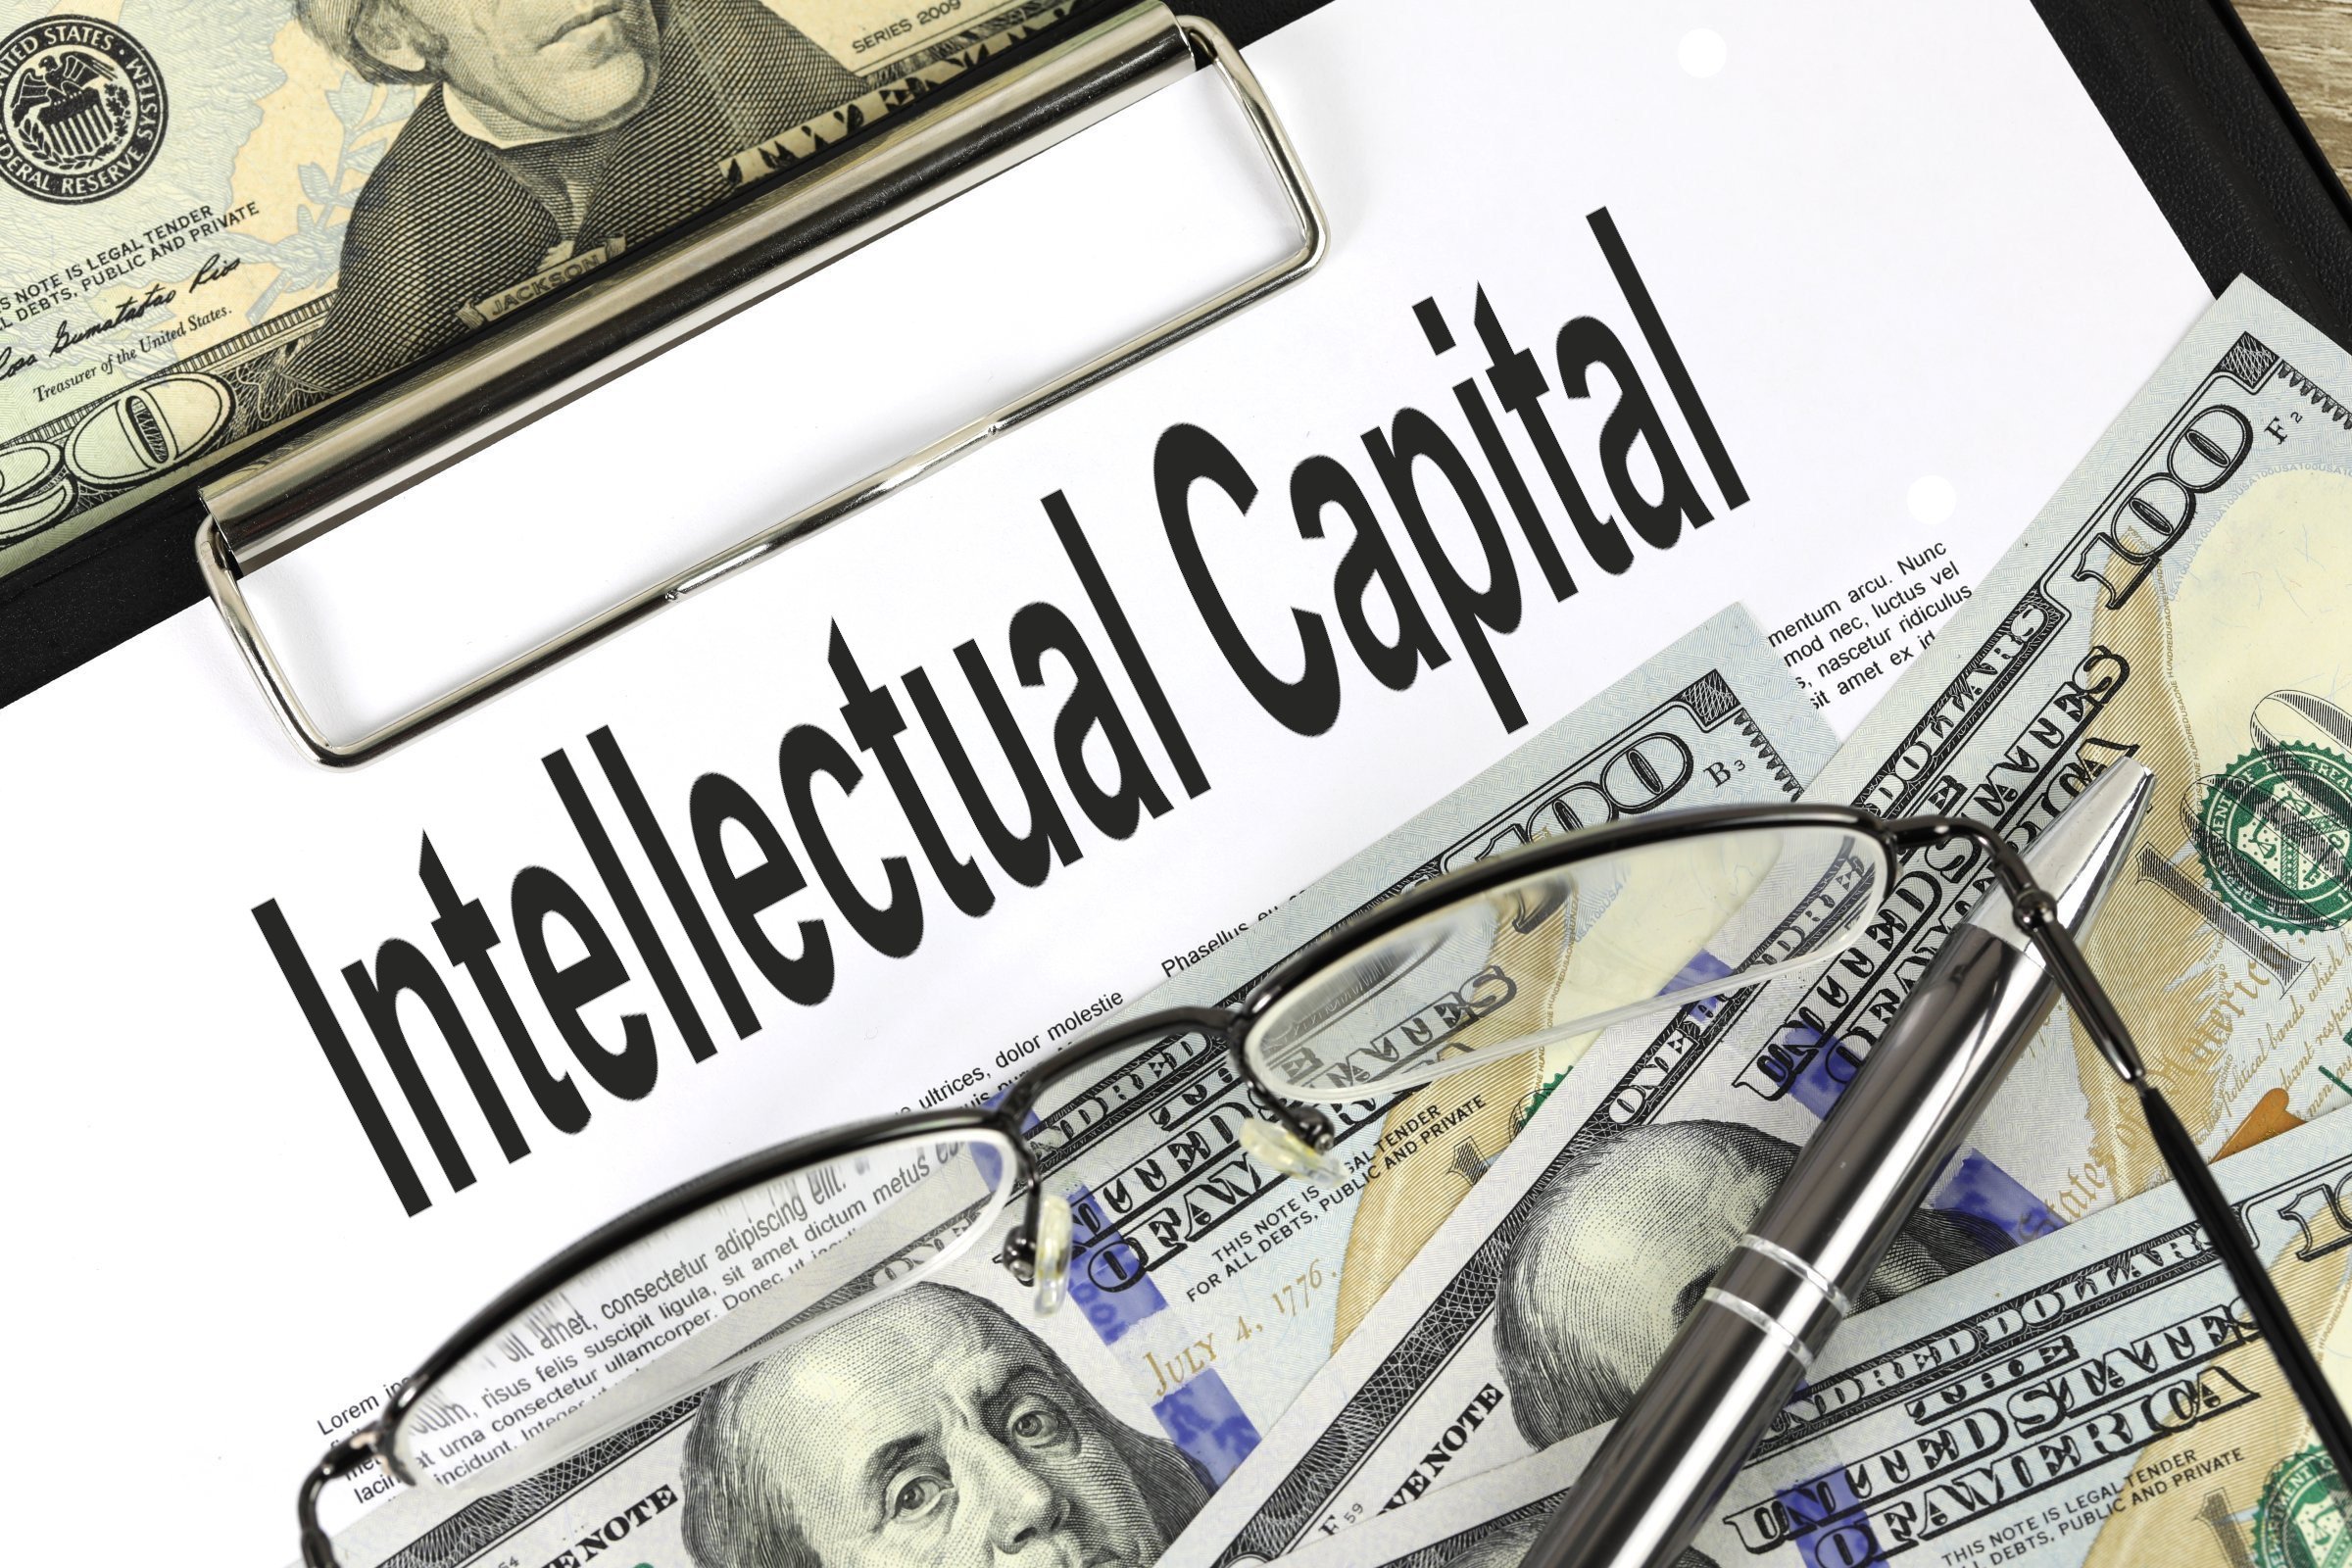 intellectual capital